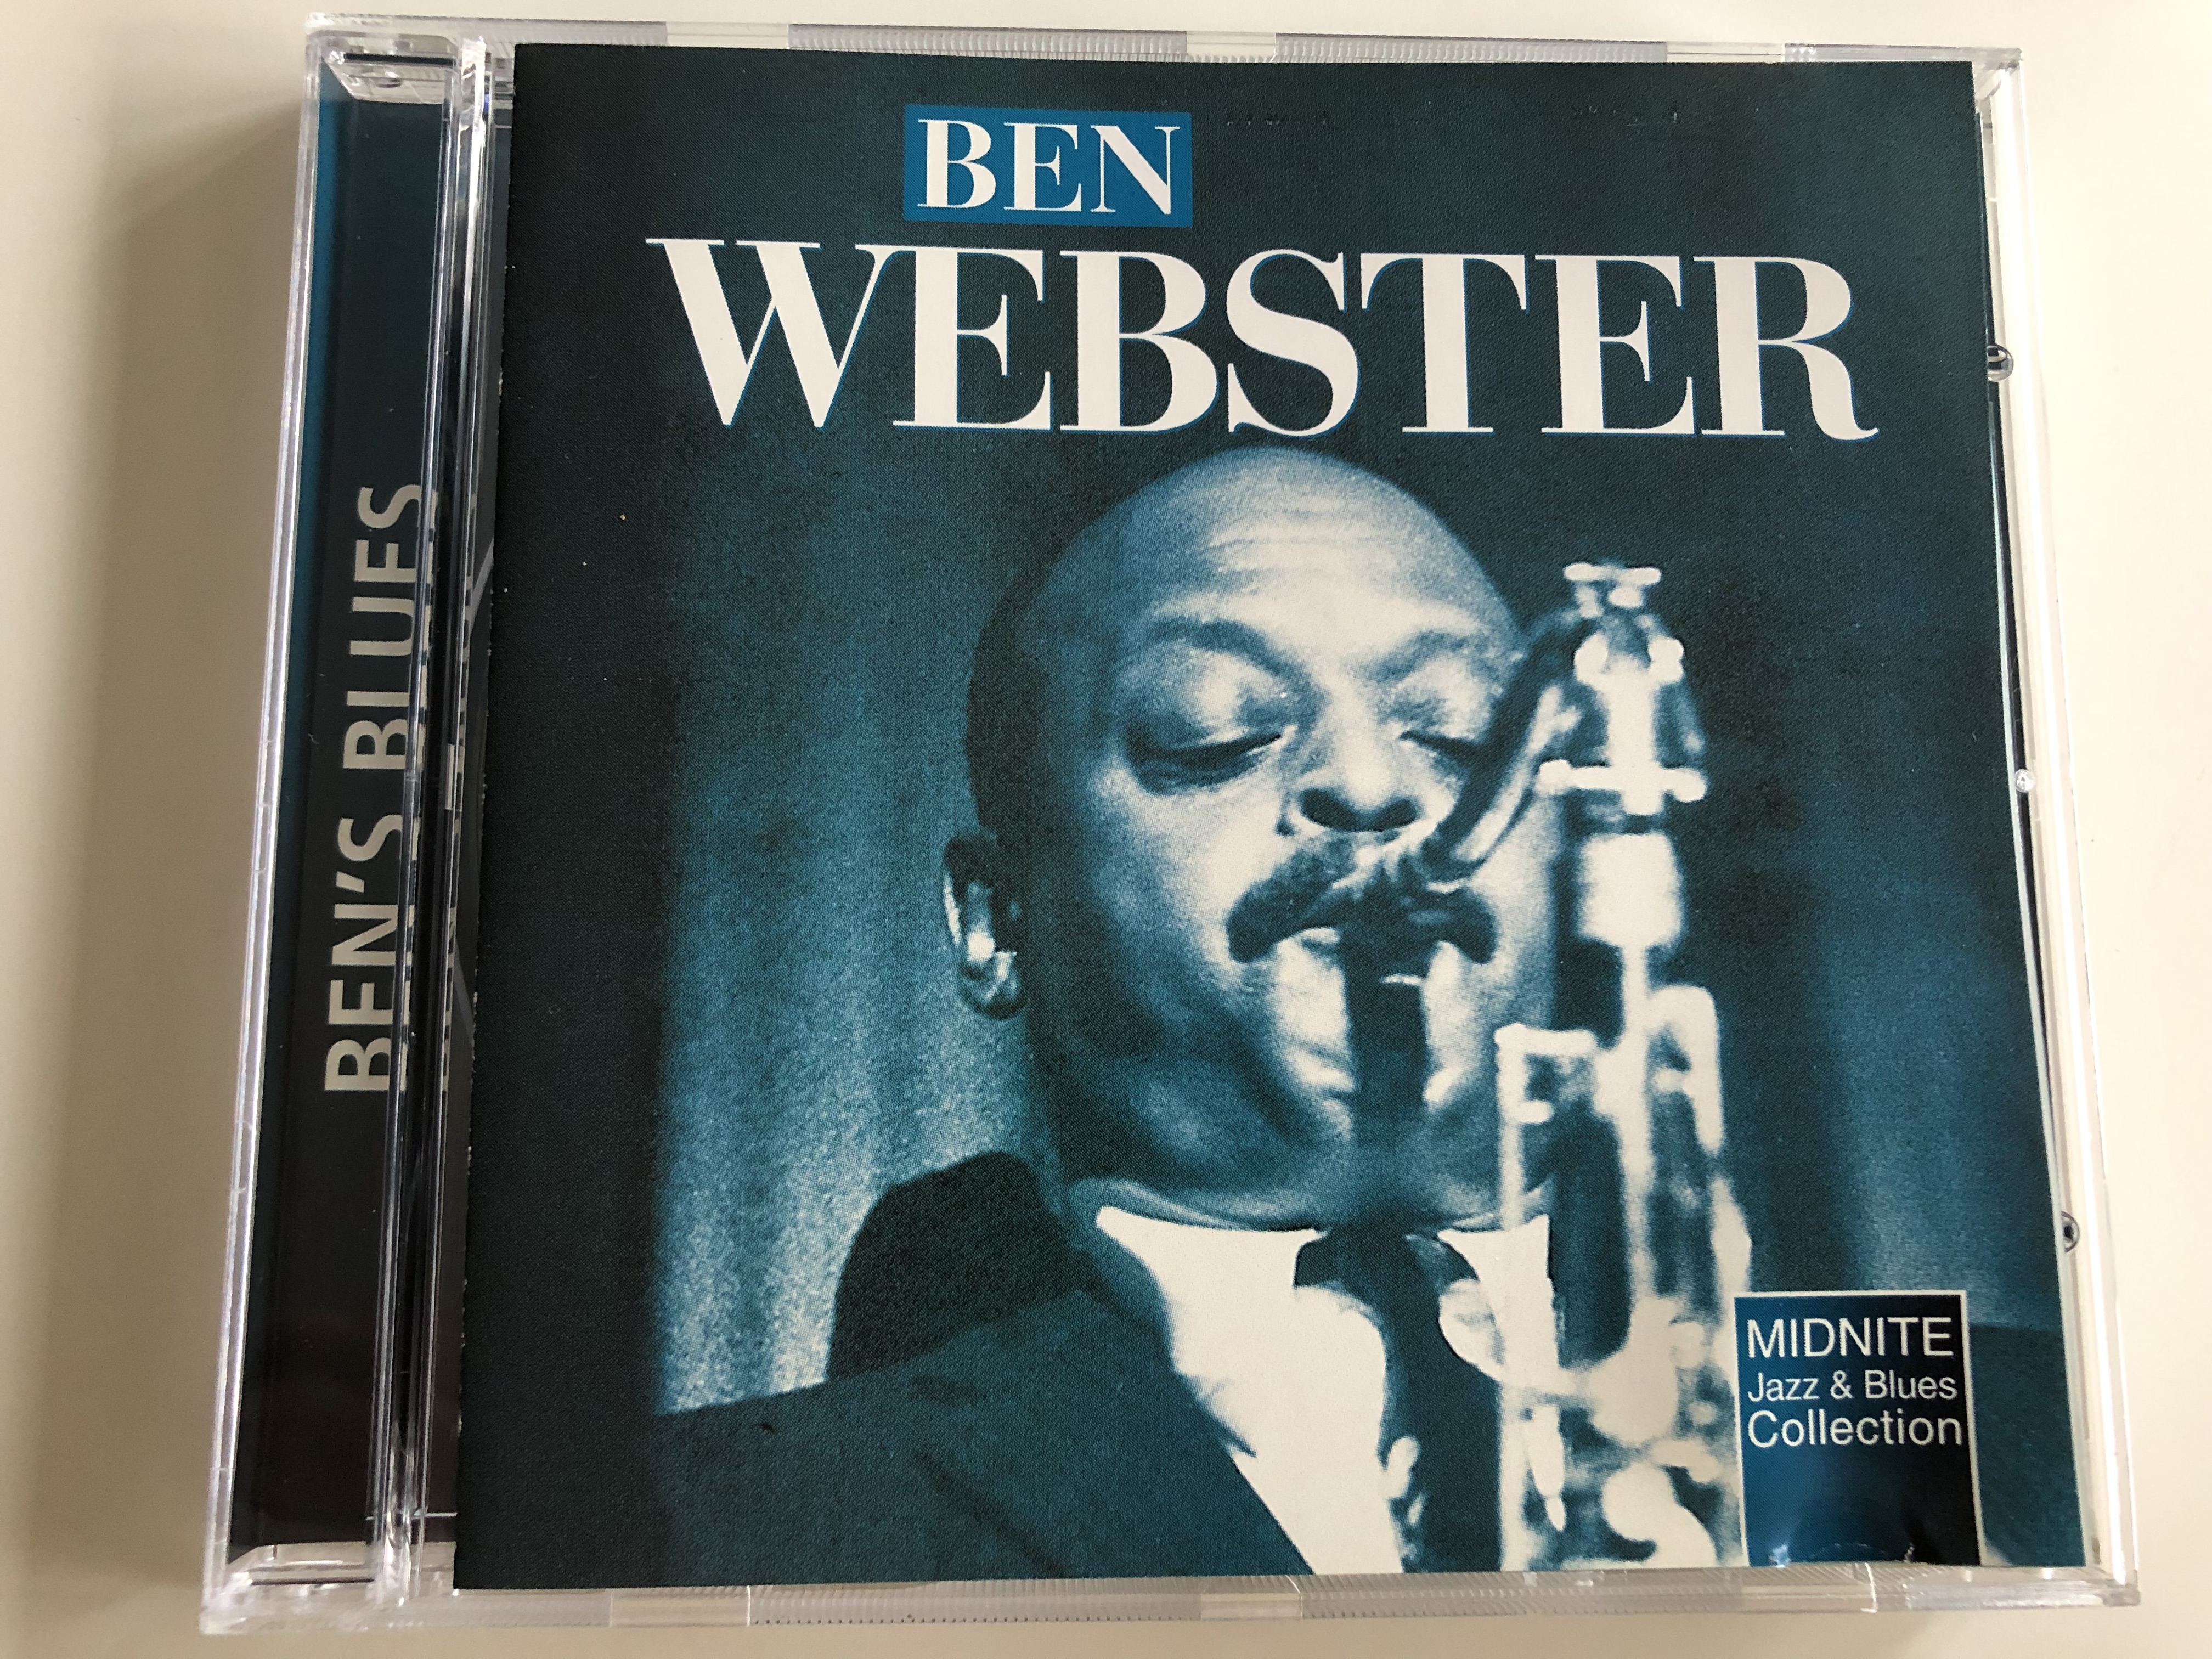 ben-webster-ben-s-blues-midnite-jazz-blues-collection-audio-cd-2000-mjb080-1-.jpg